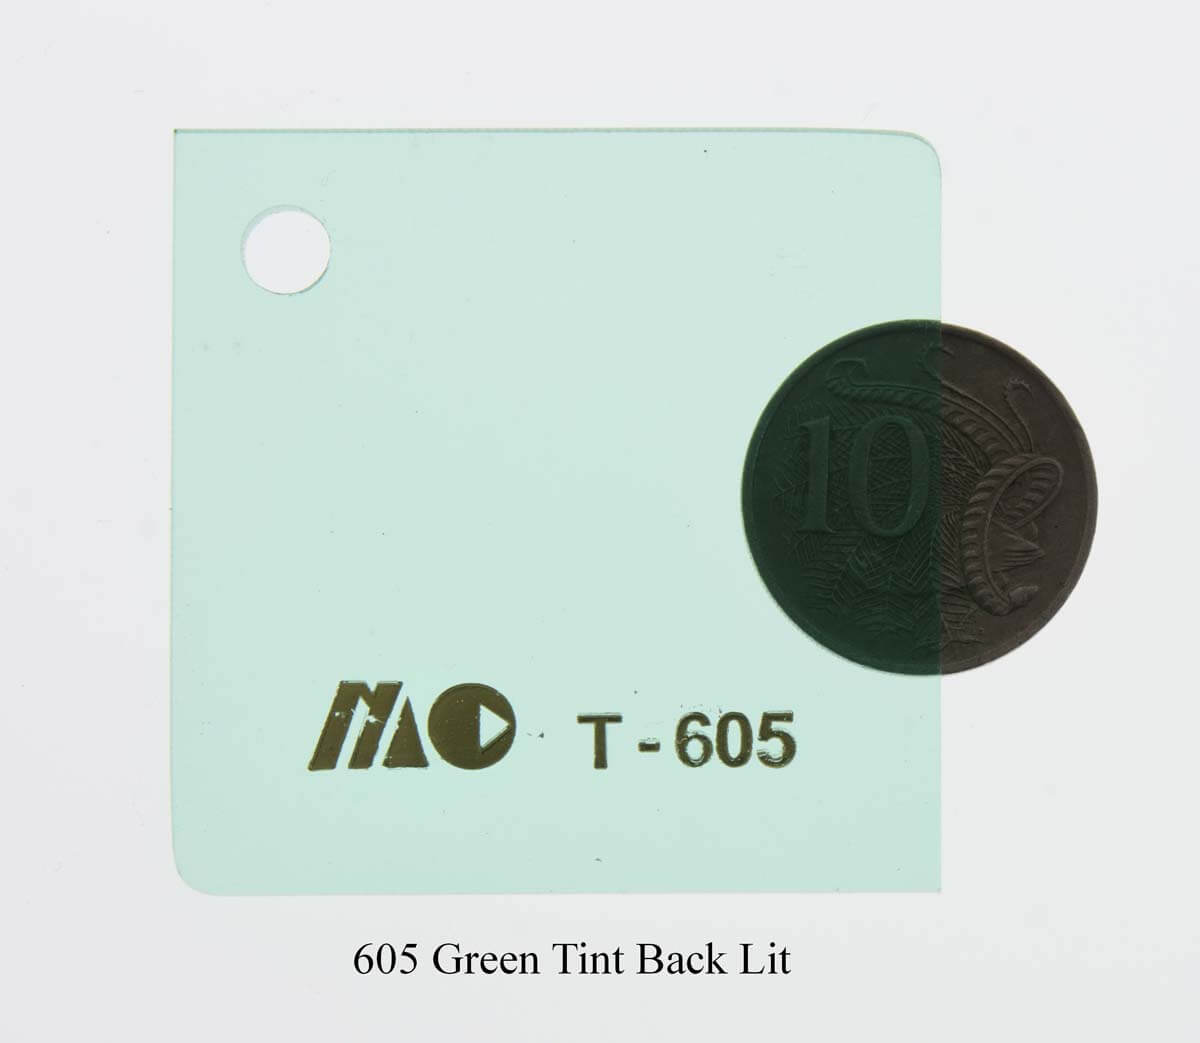 605 Green Tint Back Lit